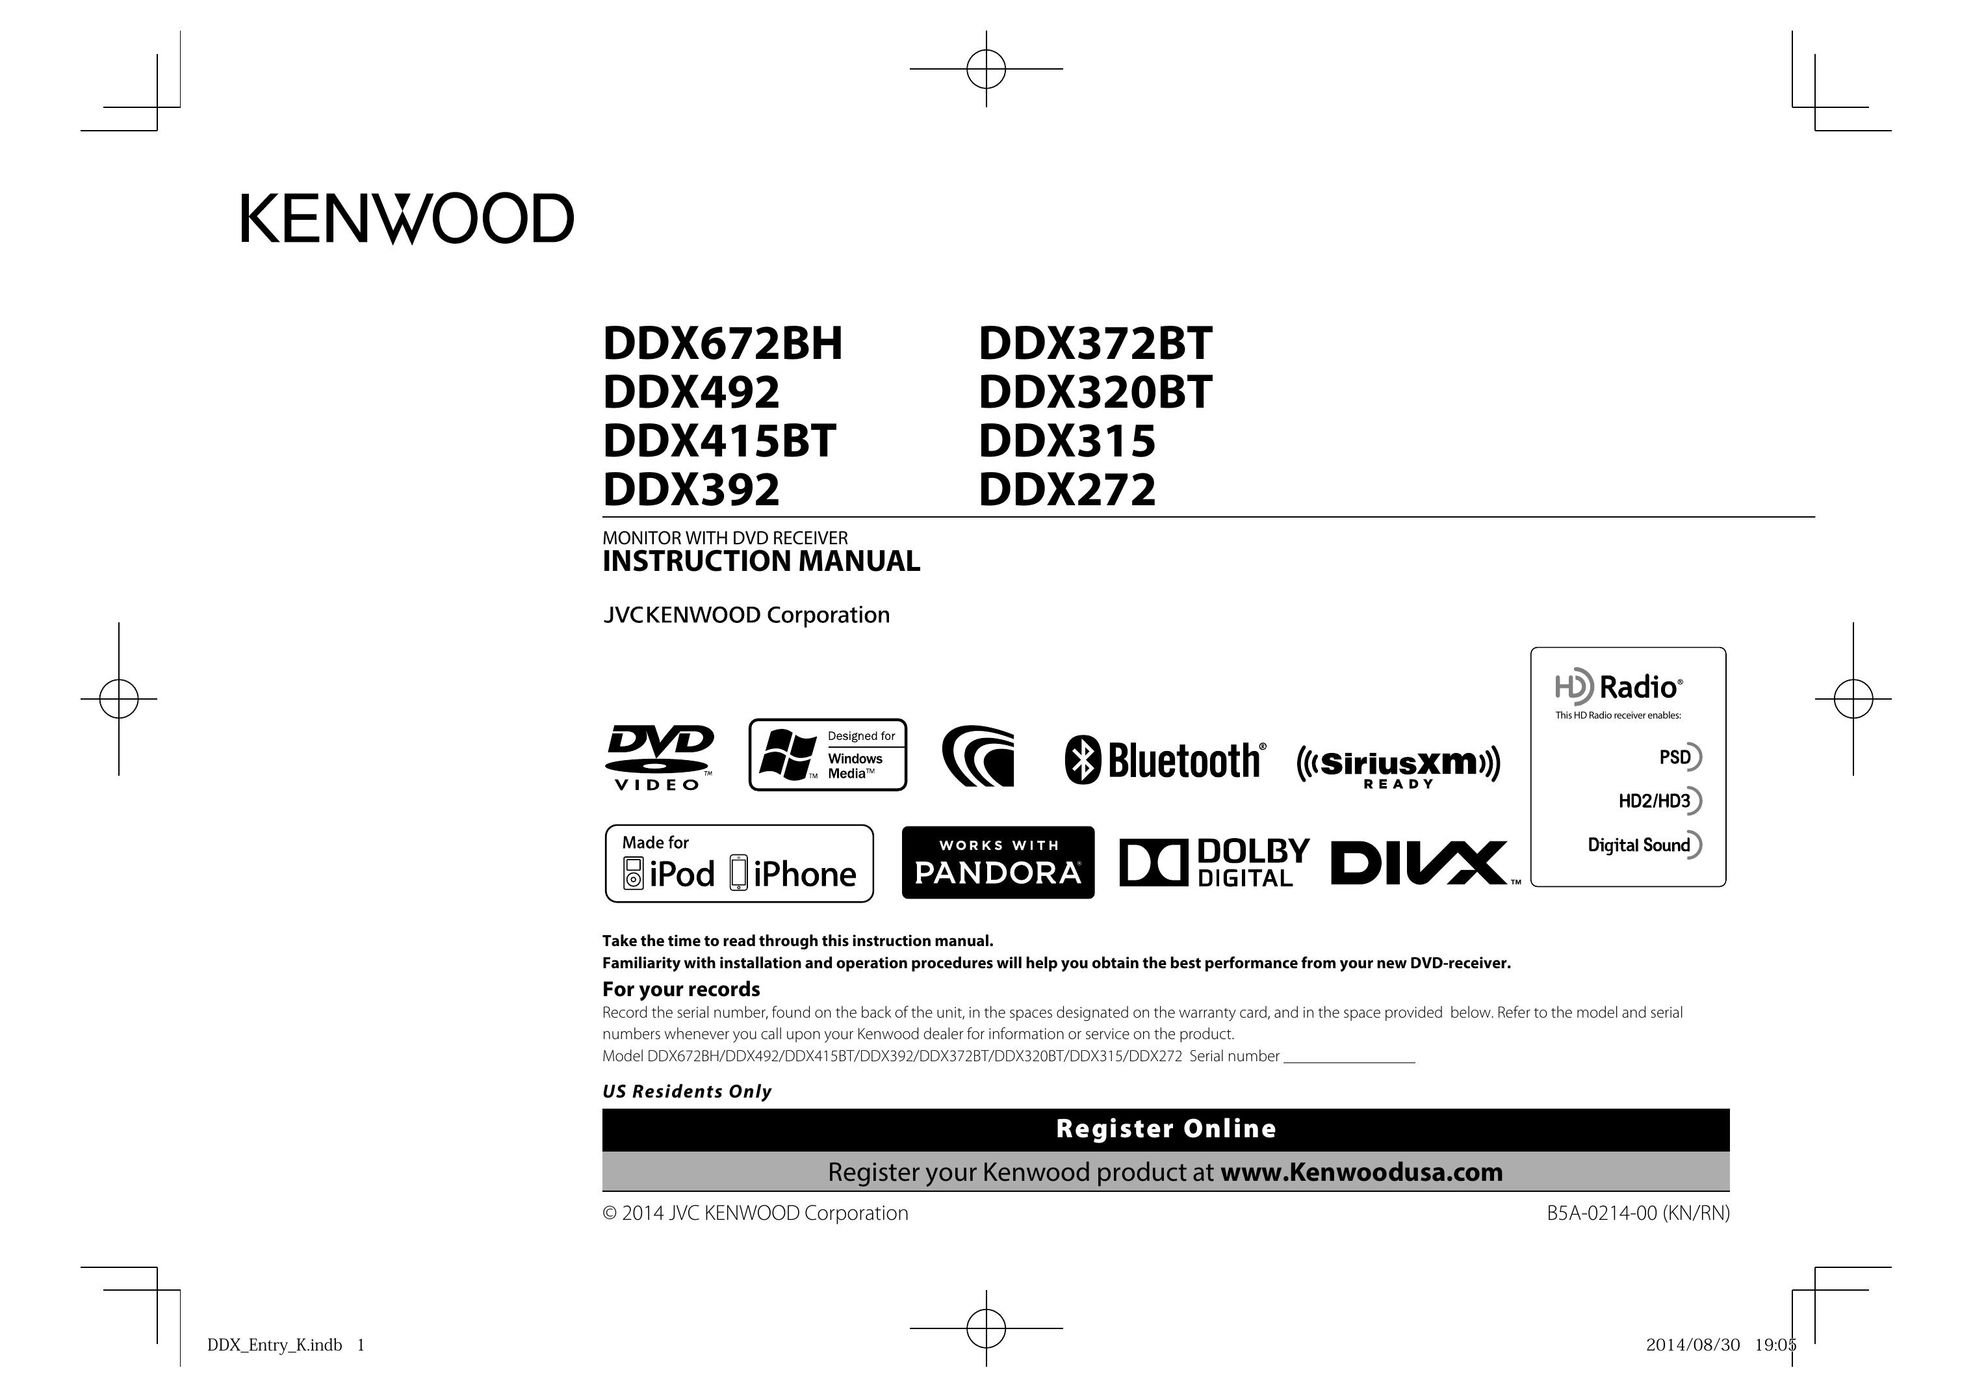 Kenwood DDX672BH Car Video System User Manual